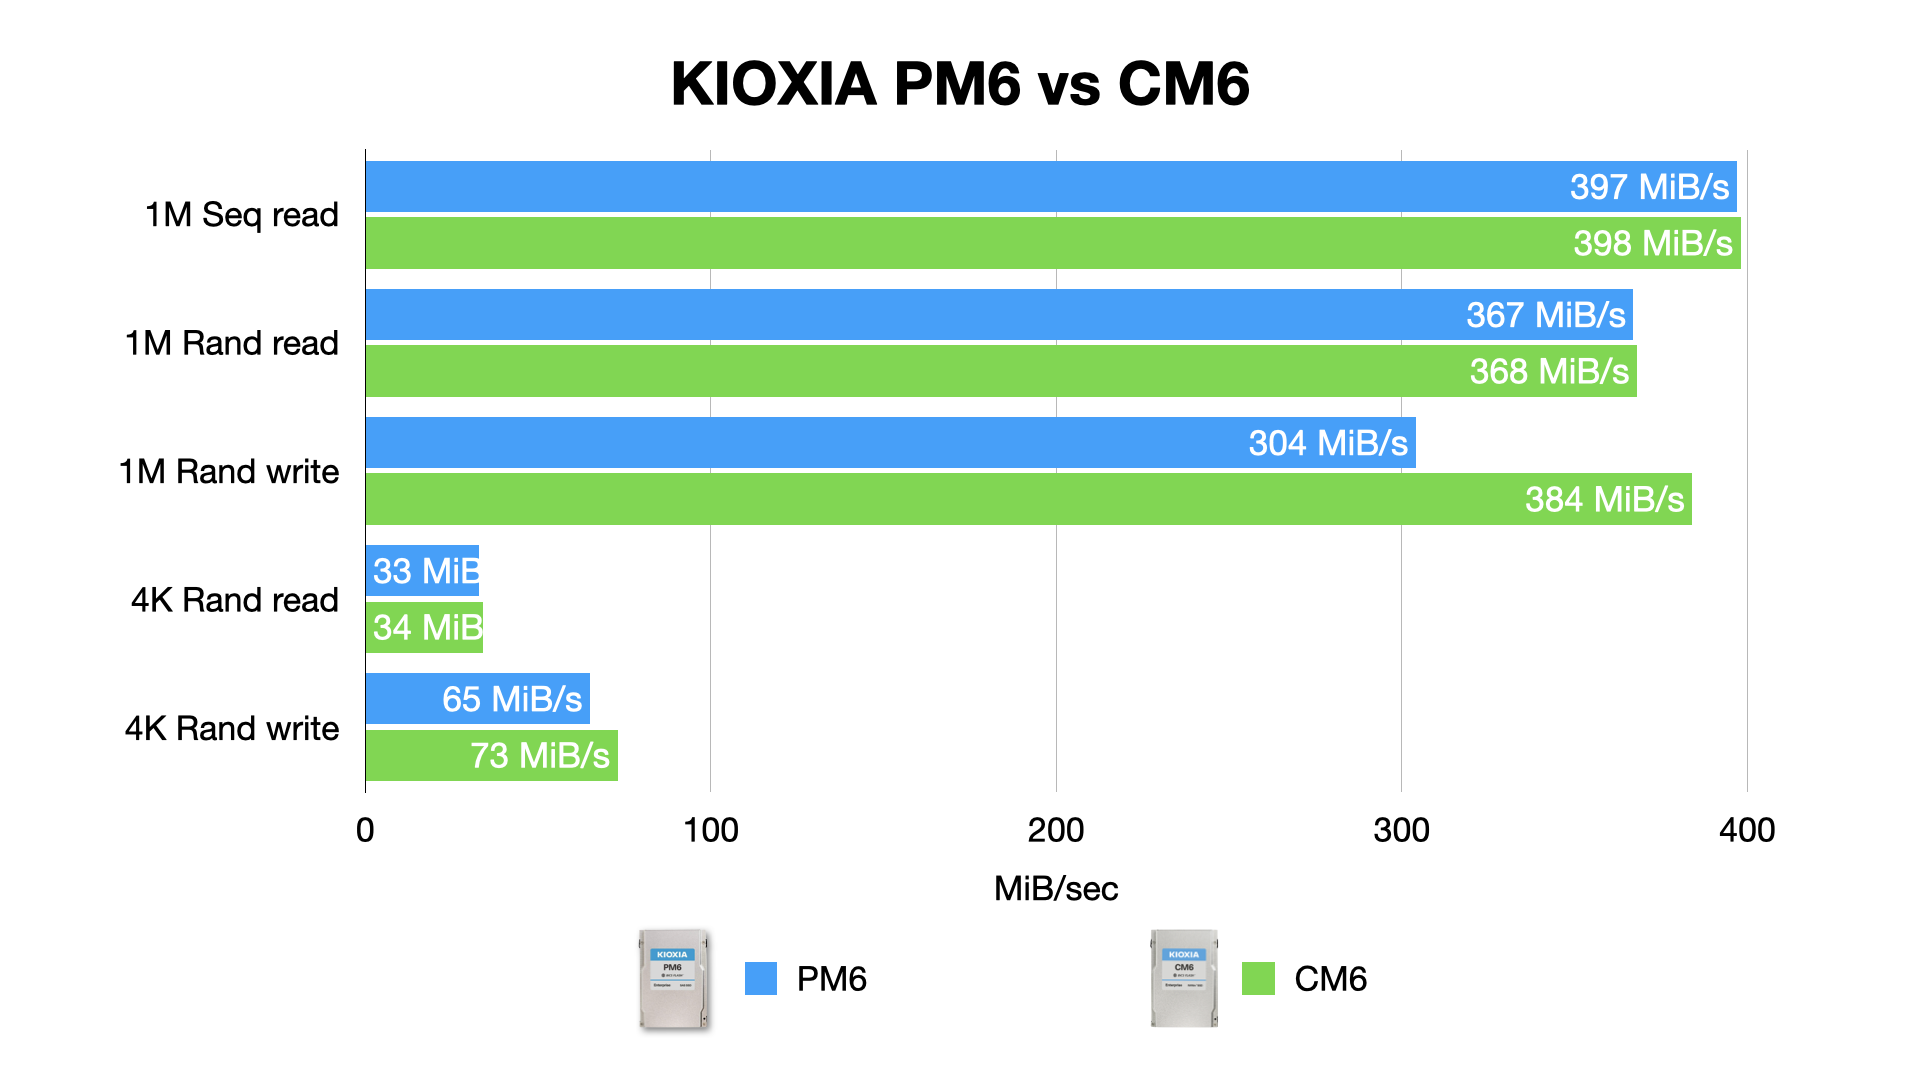 KIOXIA PM6 vs CM6 on Raspberry Pi Compute Module 4